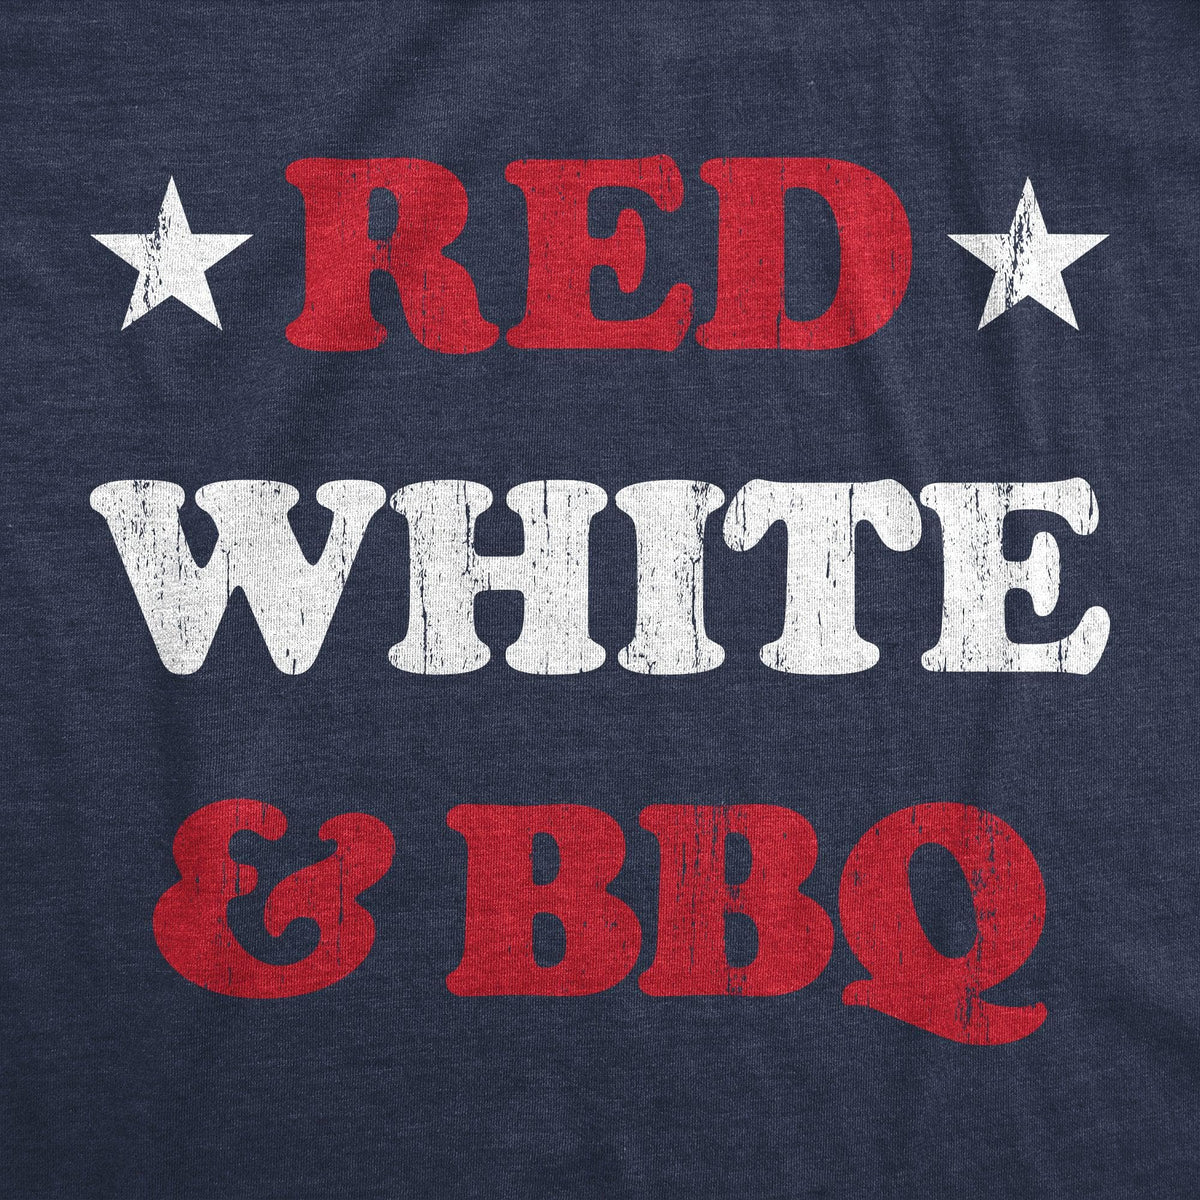 Red White And BBQ Men&#39;s Tshirt  -  Crazy Dog T-Shirts